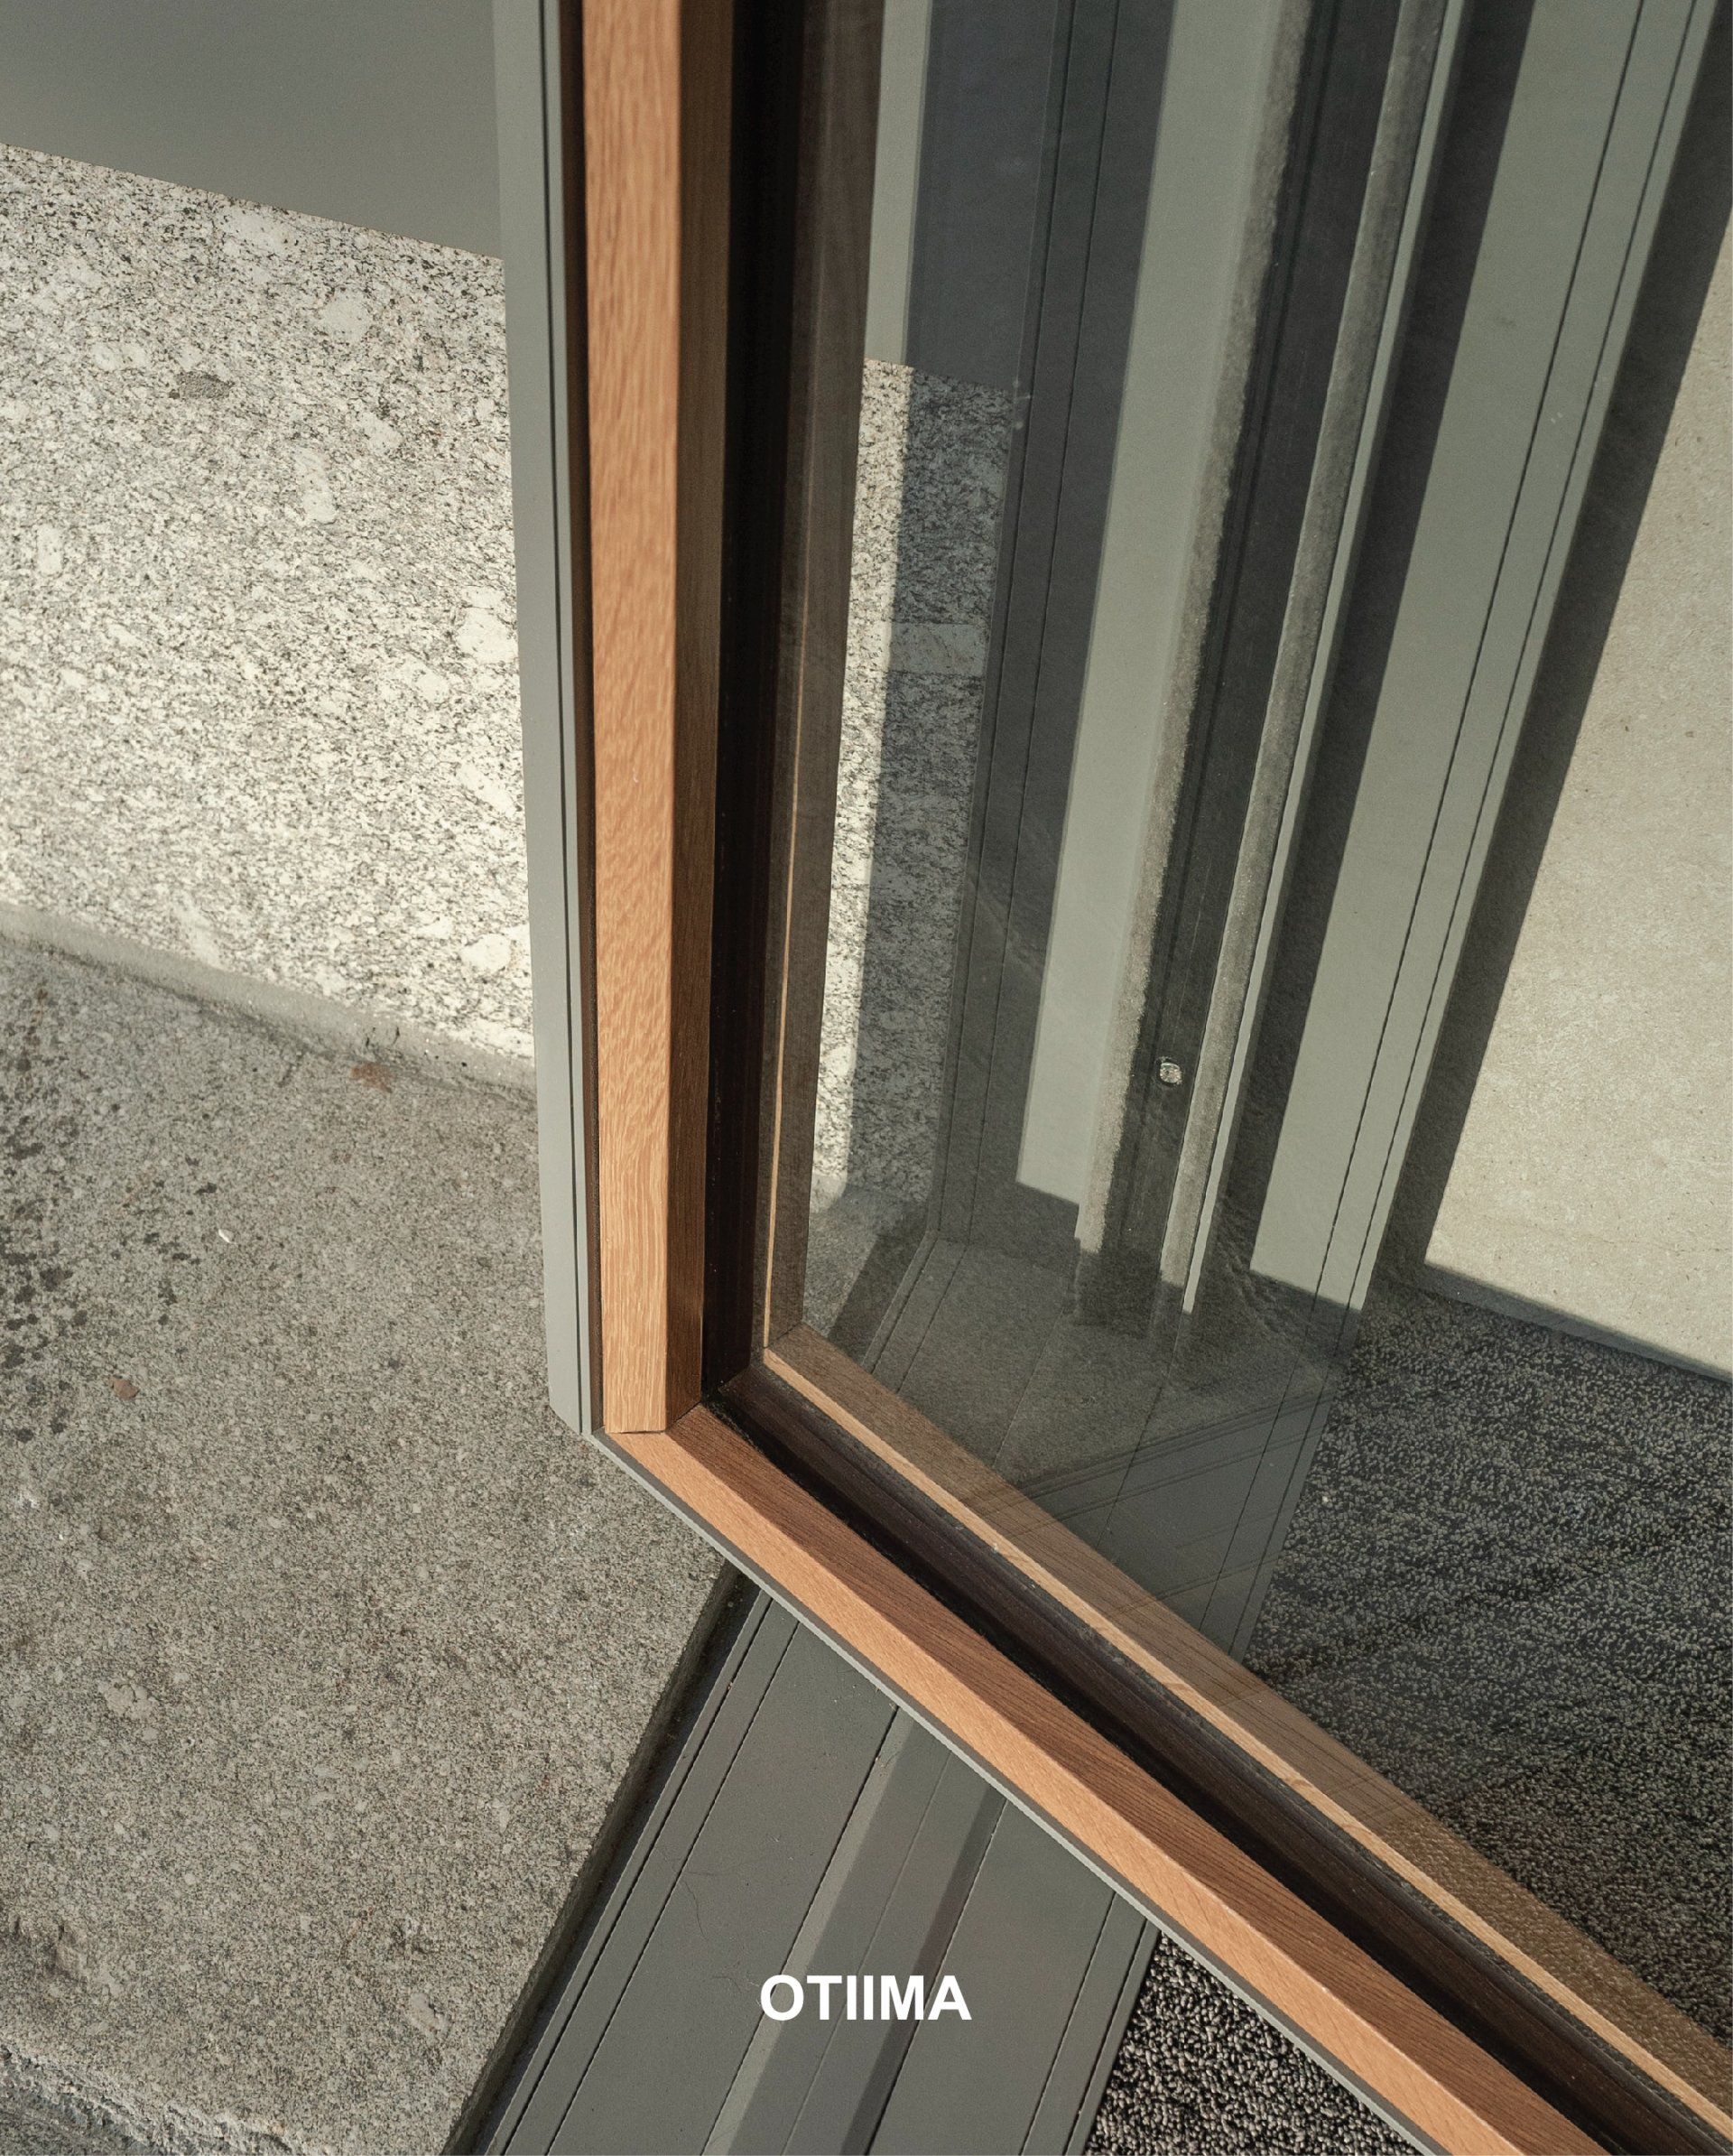 Minimalist frame window showcasing a modern design and minimalist architecture